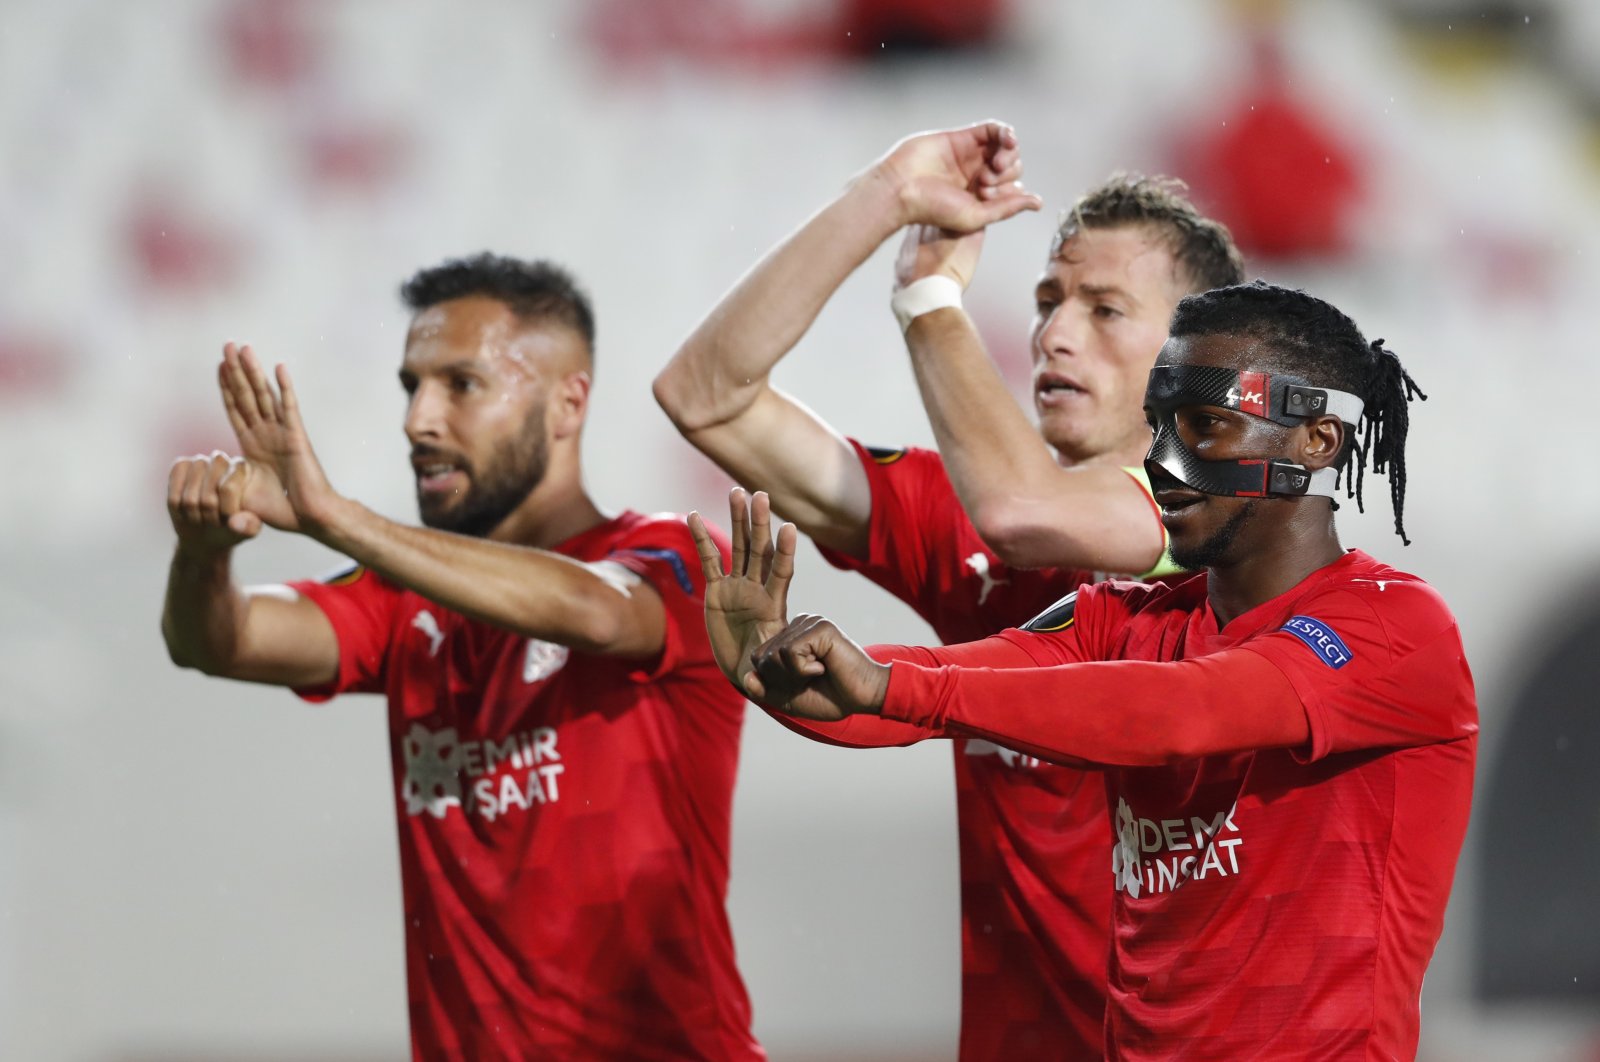 Sivasspor's Olarenwaju Kayode (R) celebrates after scoring the team's second goal in a UEFA Europa League group stage match against Qarabag, Sivas, Turkey, Nov. 5, 2020. (Reuters Photo)